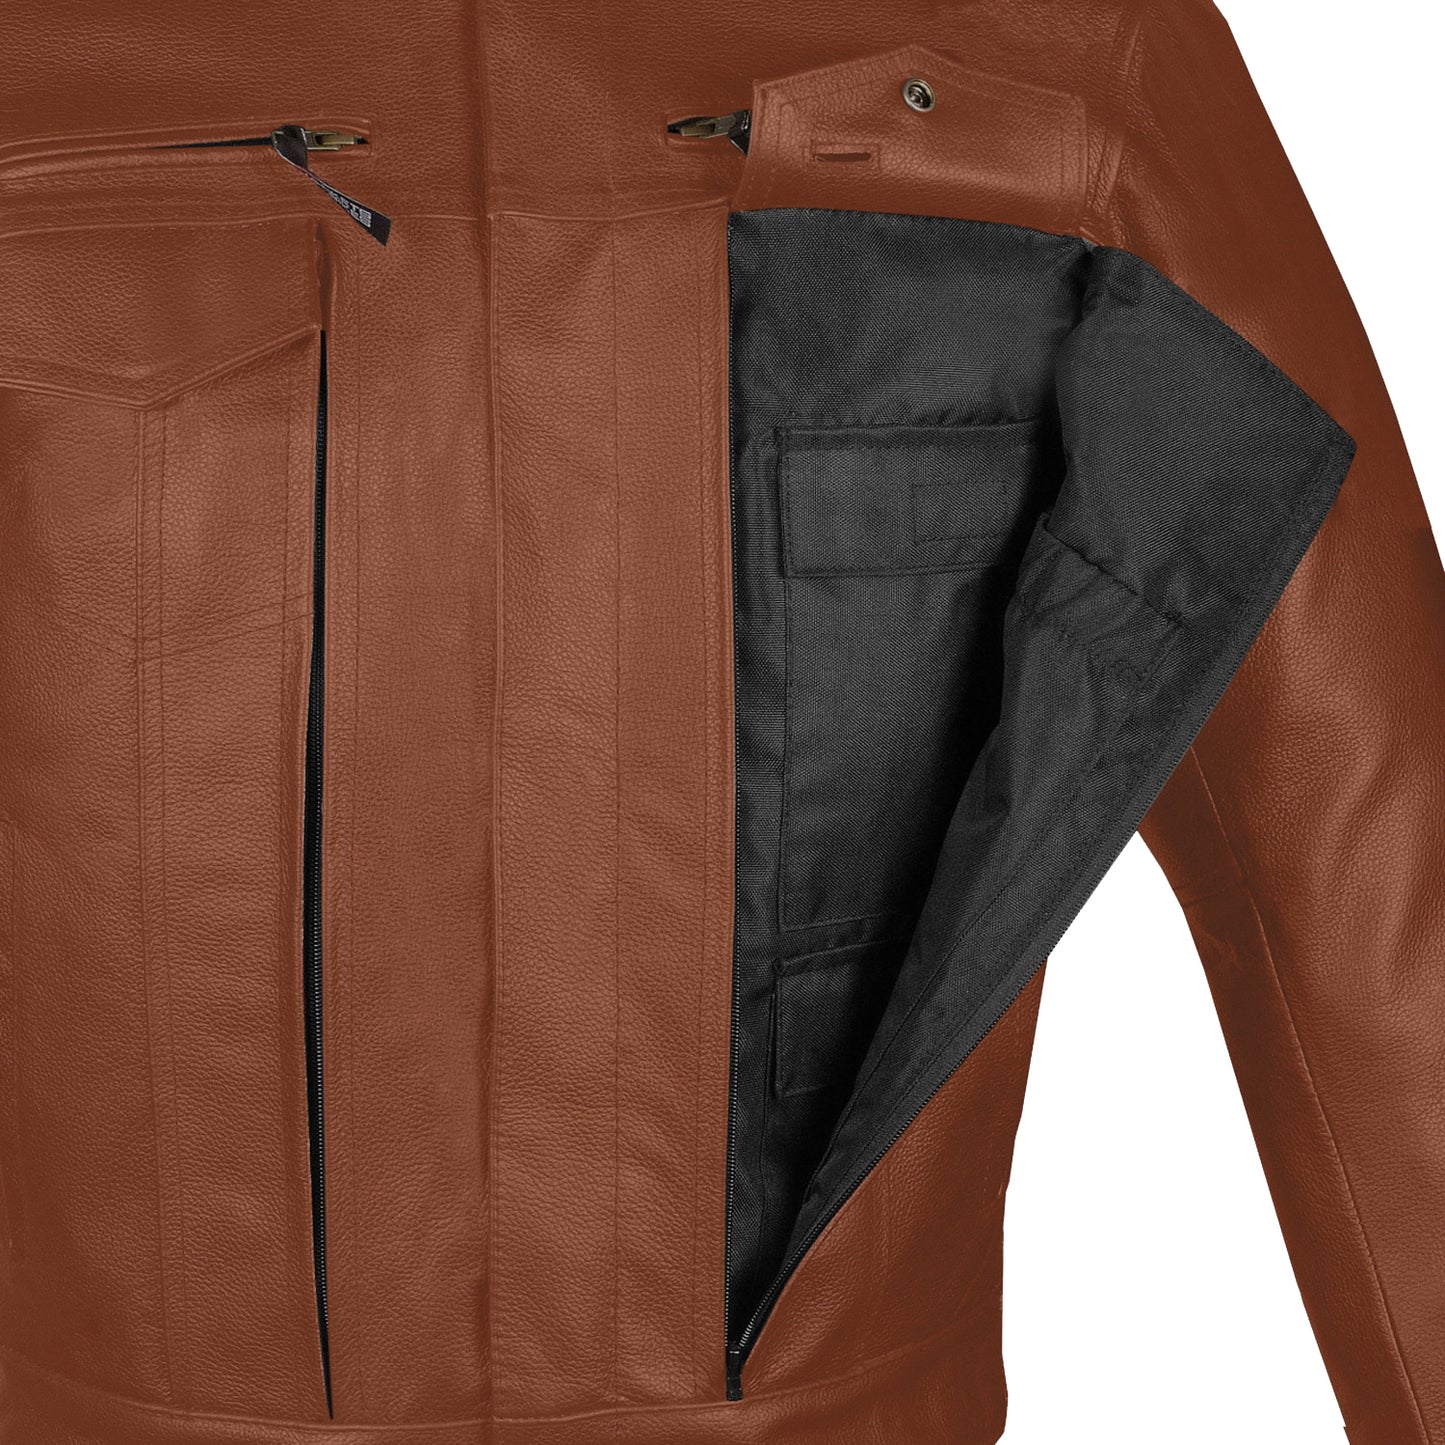 Men's Commuter Premium Natural Buffalo Armor Motorcycle Leather Biker Jacket Tan